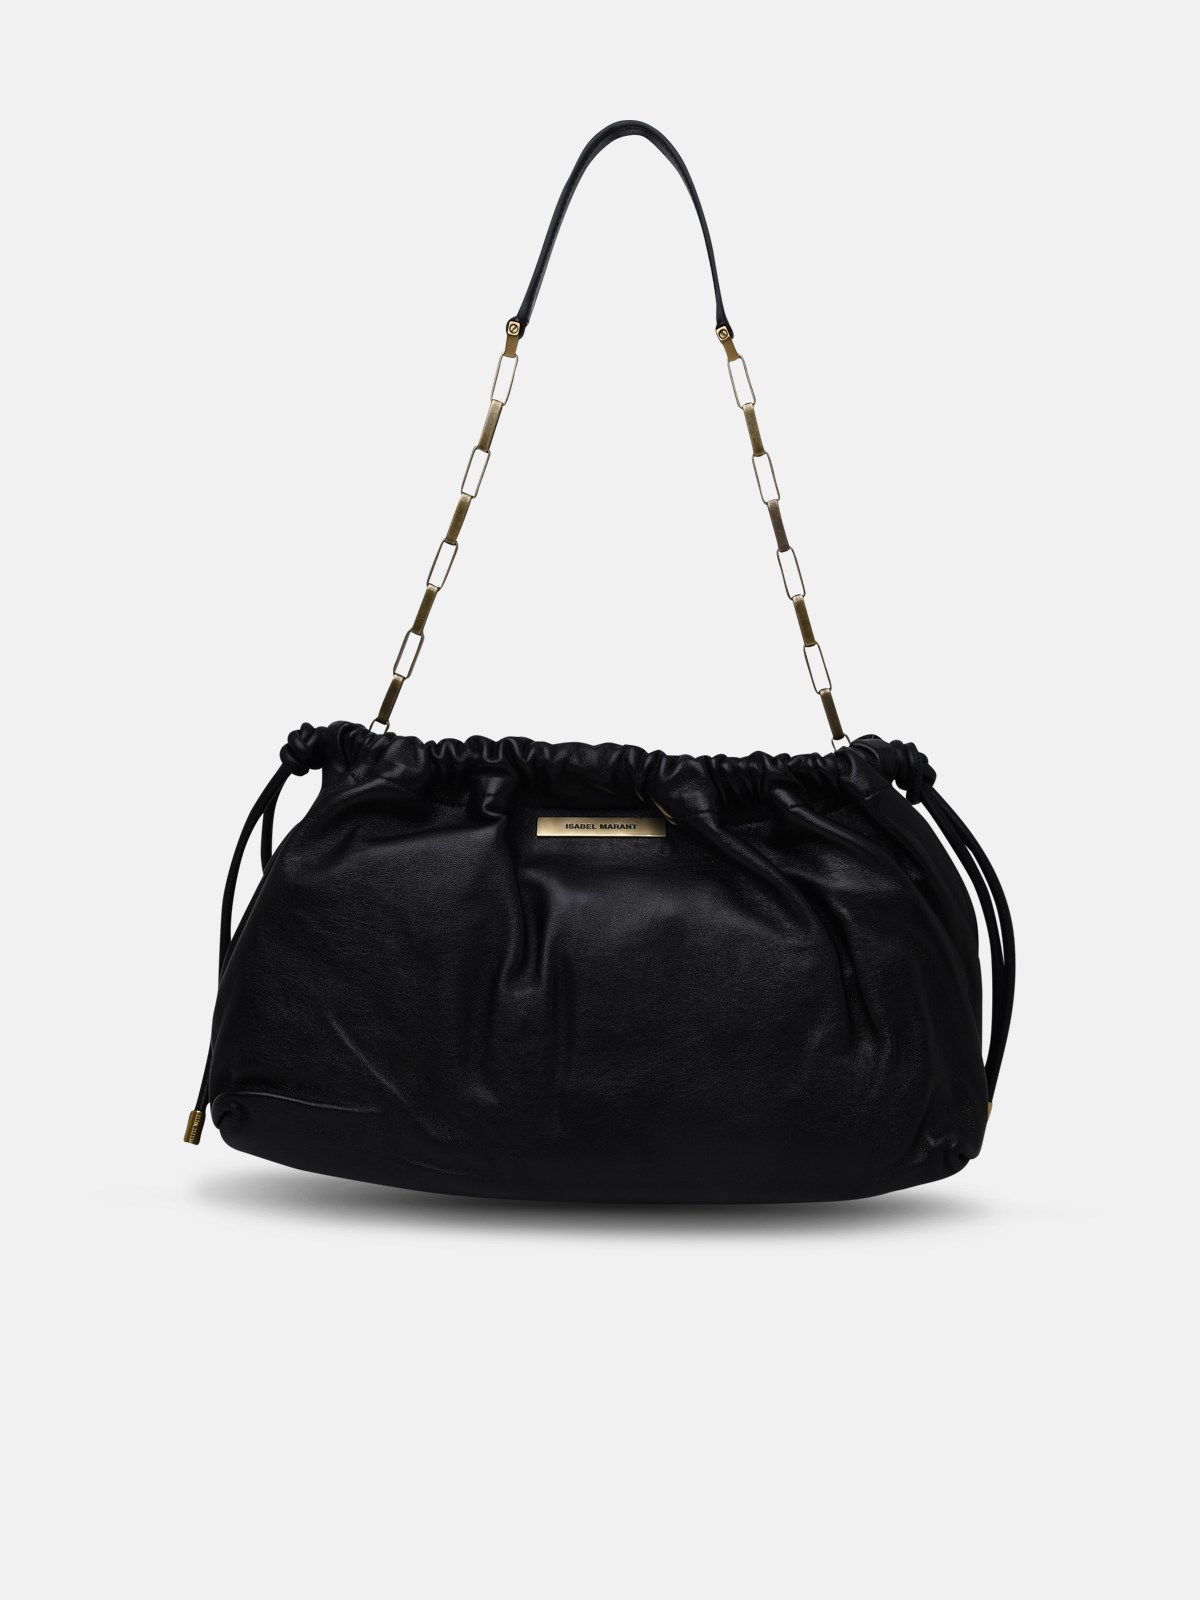 Isabel Marant Black Leather Slouchy Merine Bag